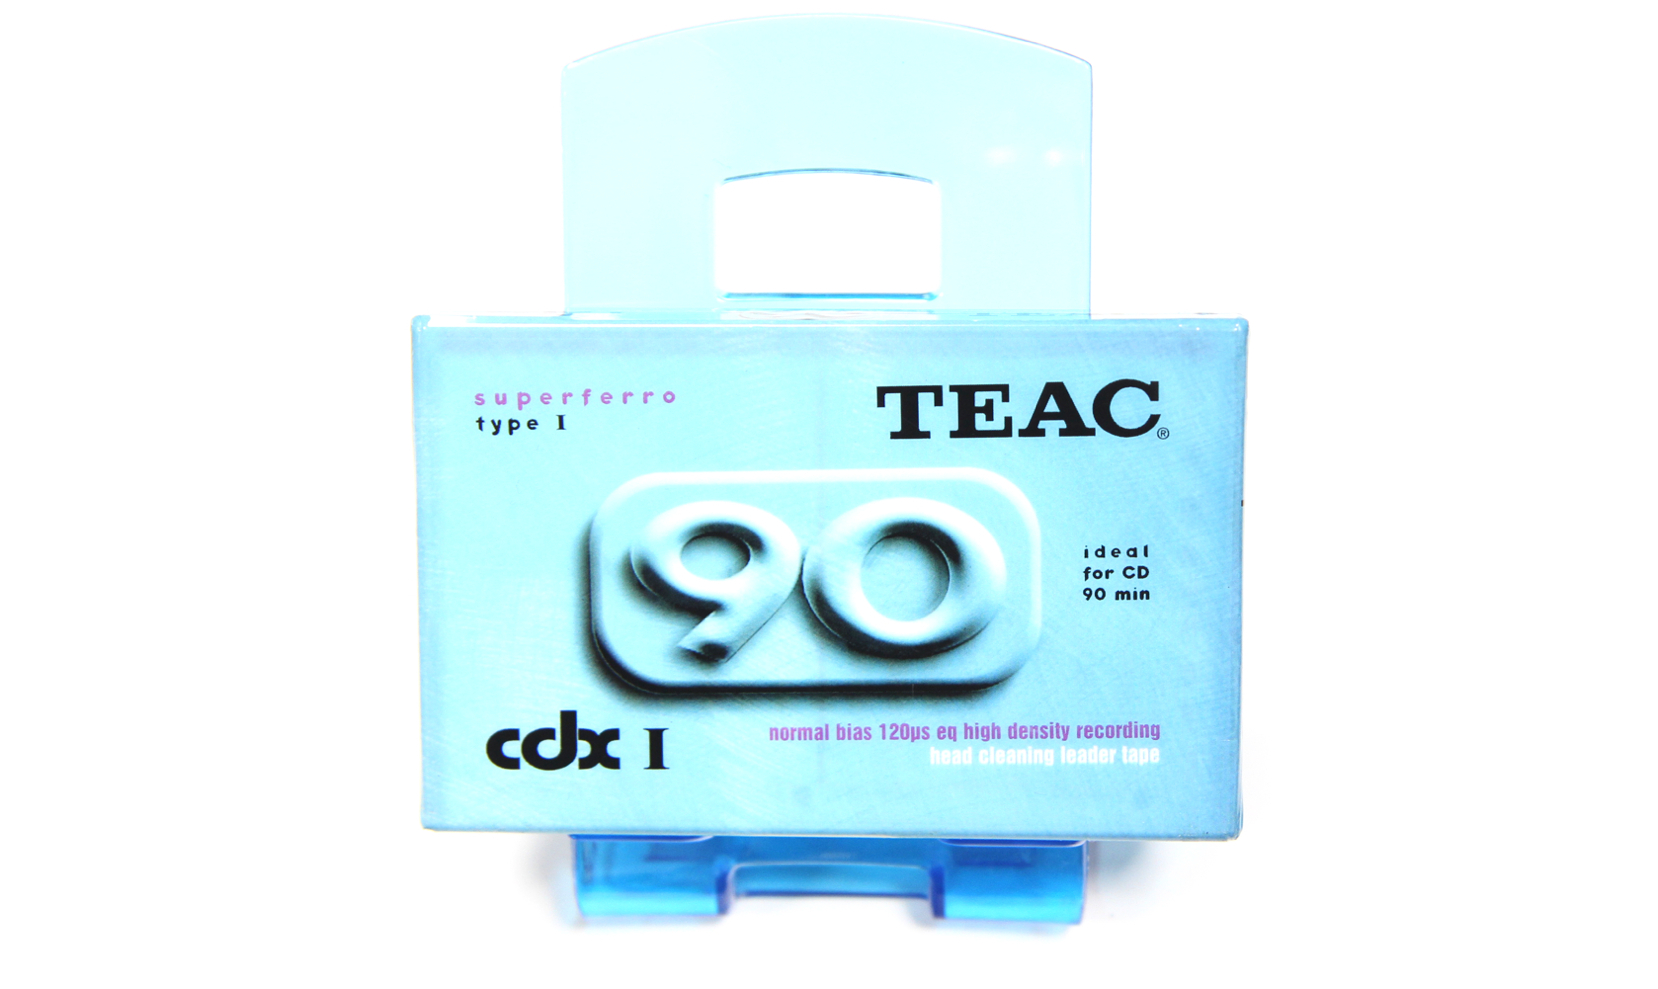 TEAC CDX-90 Superferro Normal